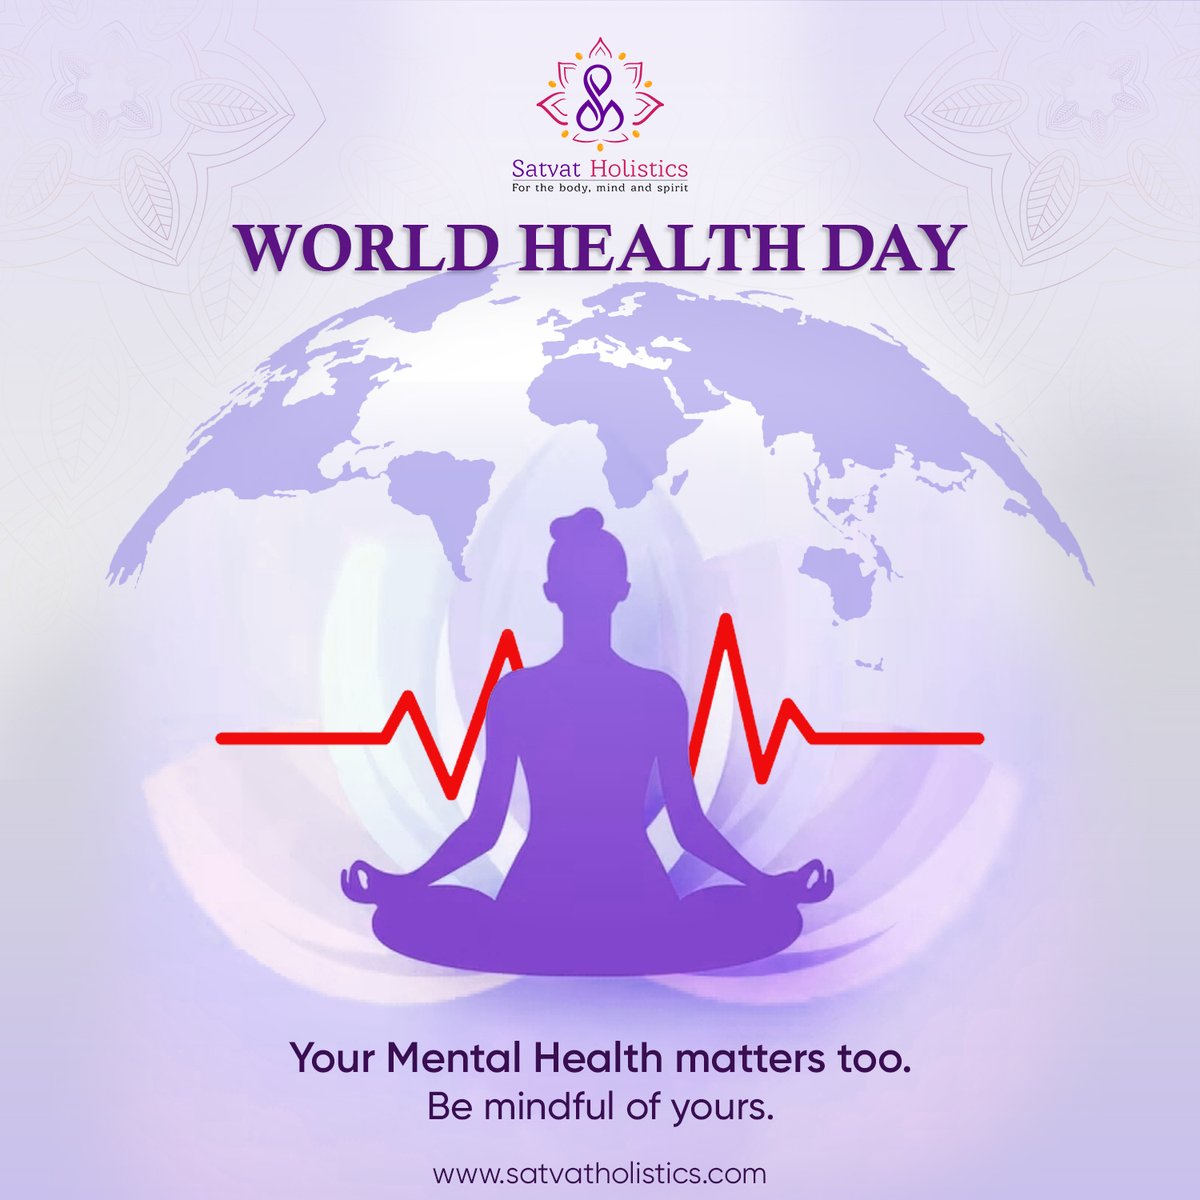 Health is the greatest wealth. Happy World Health Day!
.
.
.
#satvatholistics #WorldHealthDay‌_2023  #WorldHealthDay2023 #worldhealthday  #soundbath #yoga #stayhealthy #happiness #innerpeace #calm #mindandbodyhealth #mentalhealthawareness